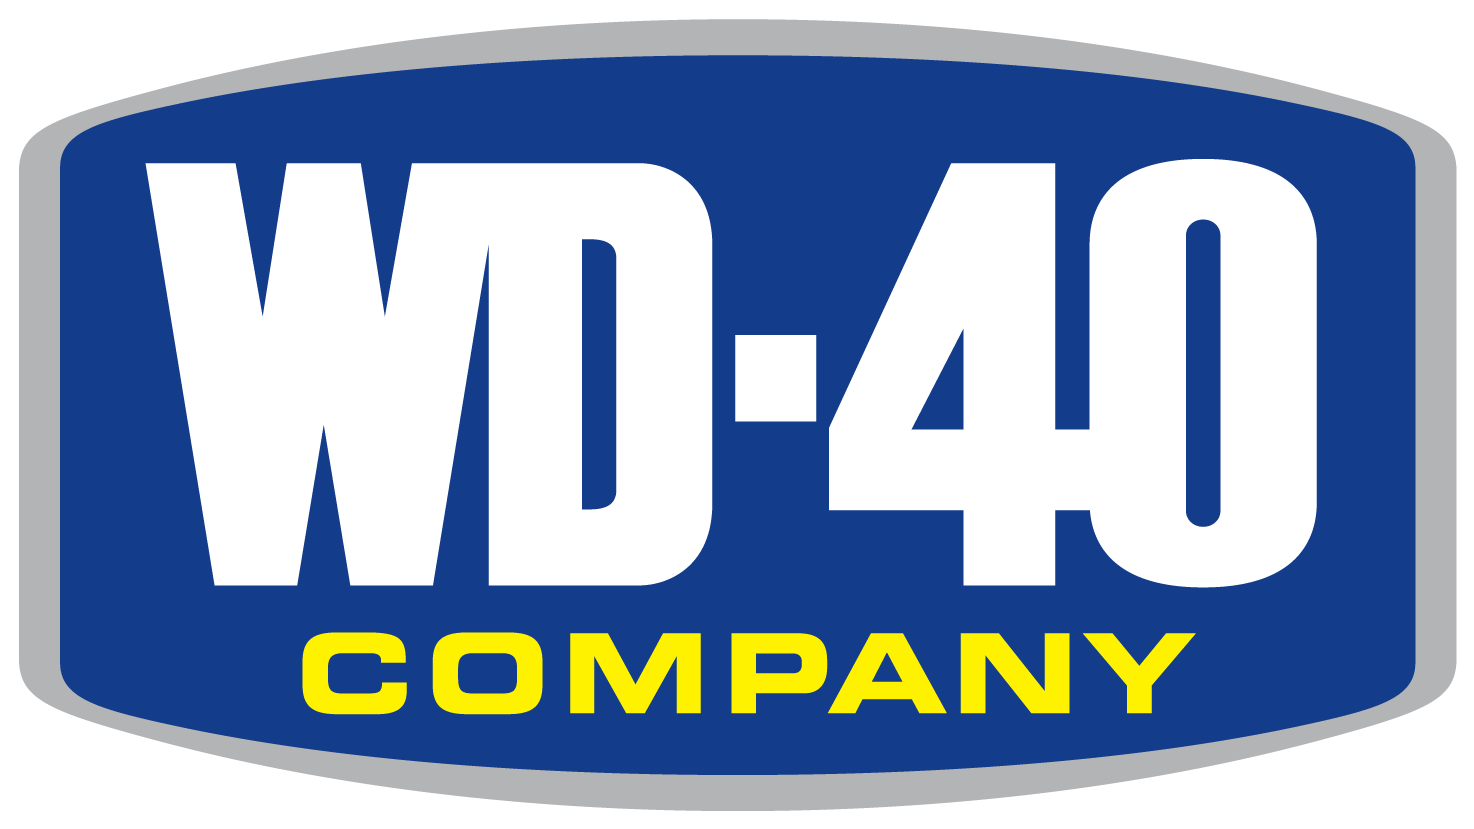 WD-40 logo